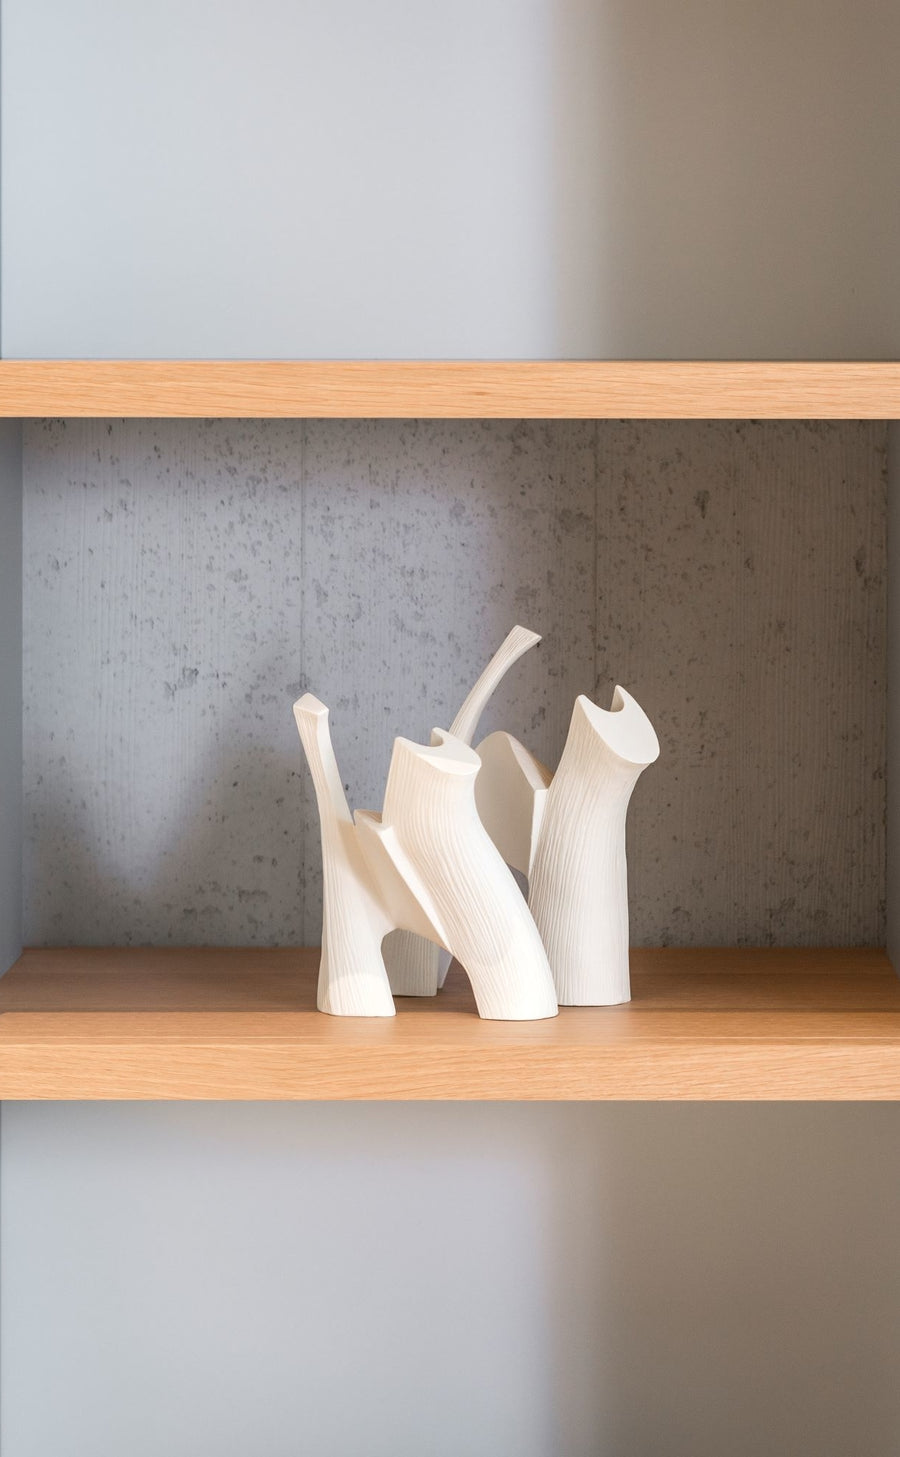 Two Gardeco Ceramic Sculpture Darius White figurines on a shelf in a bookcase.